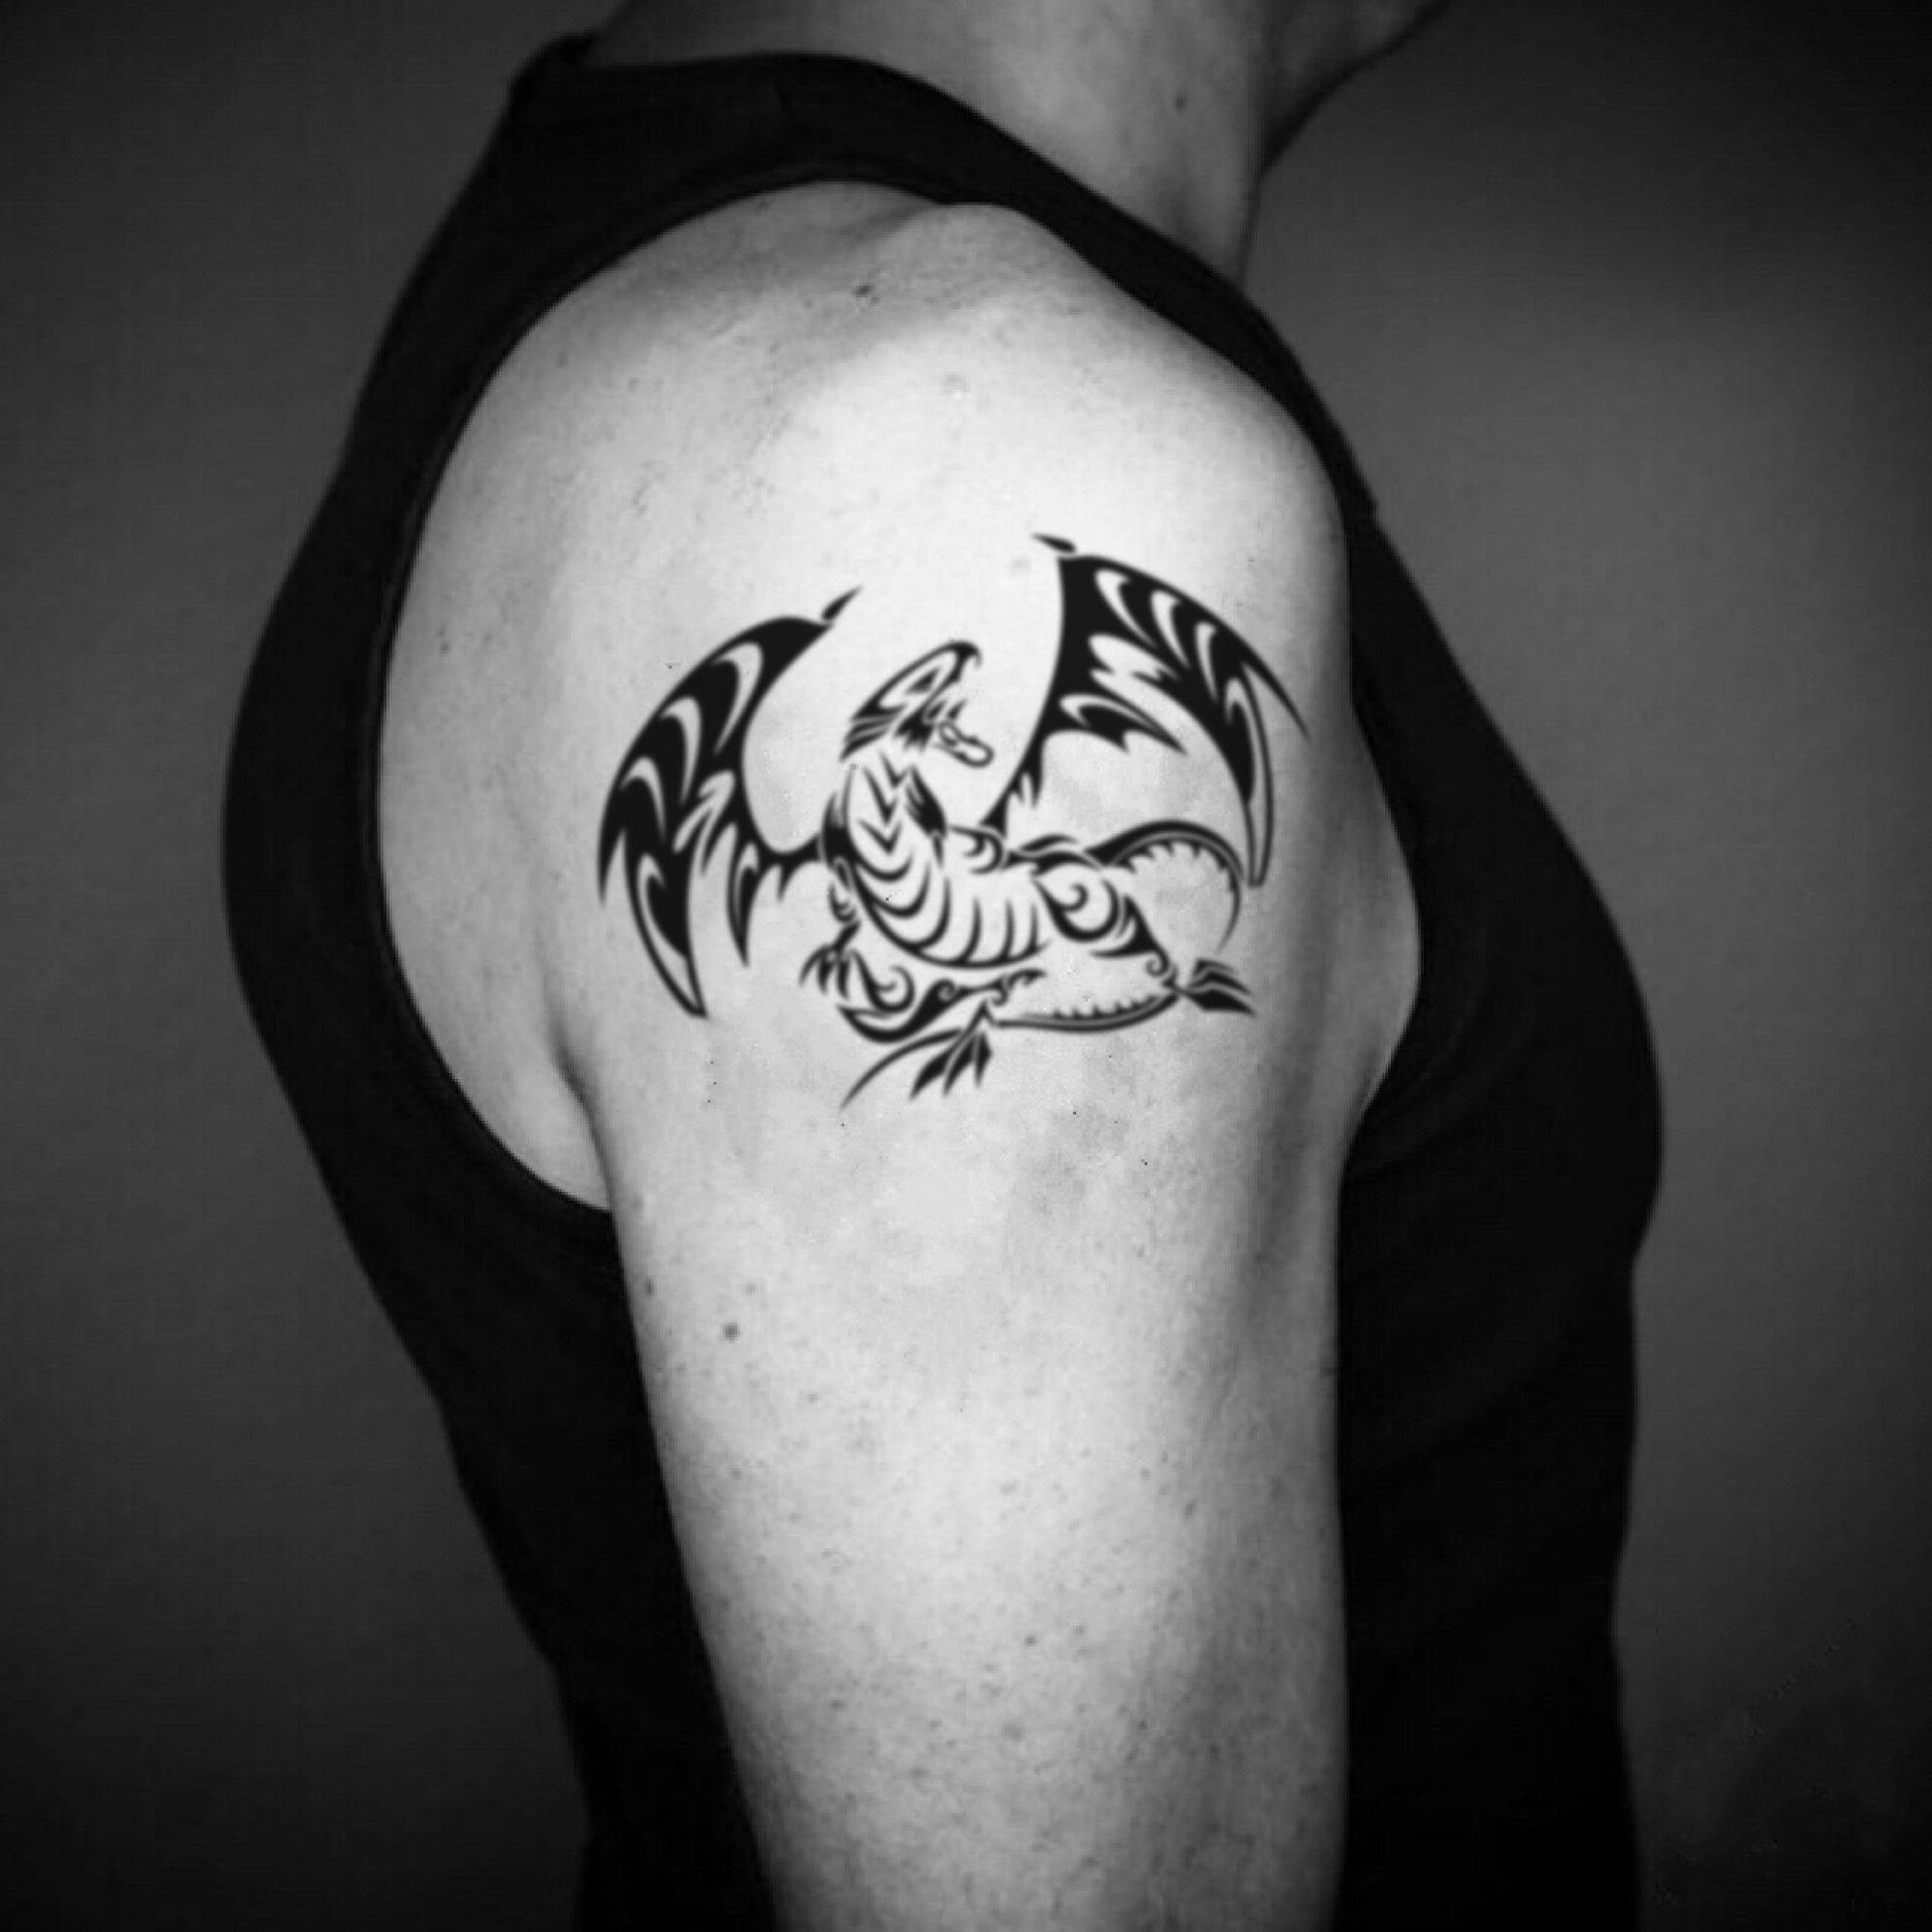 fake big blue eyes white dragon illustrative temporary tattoo sticker design idea on upper arm